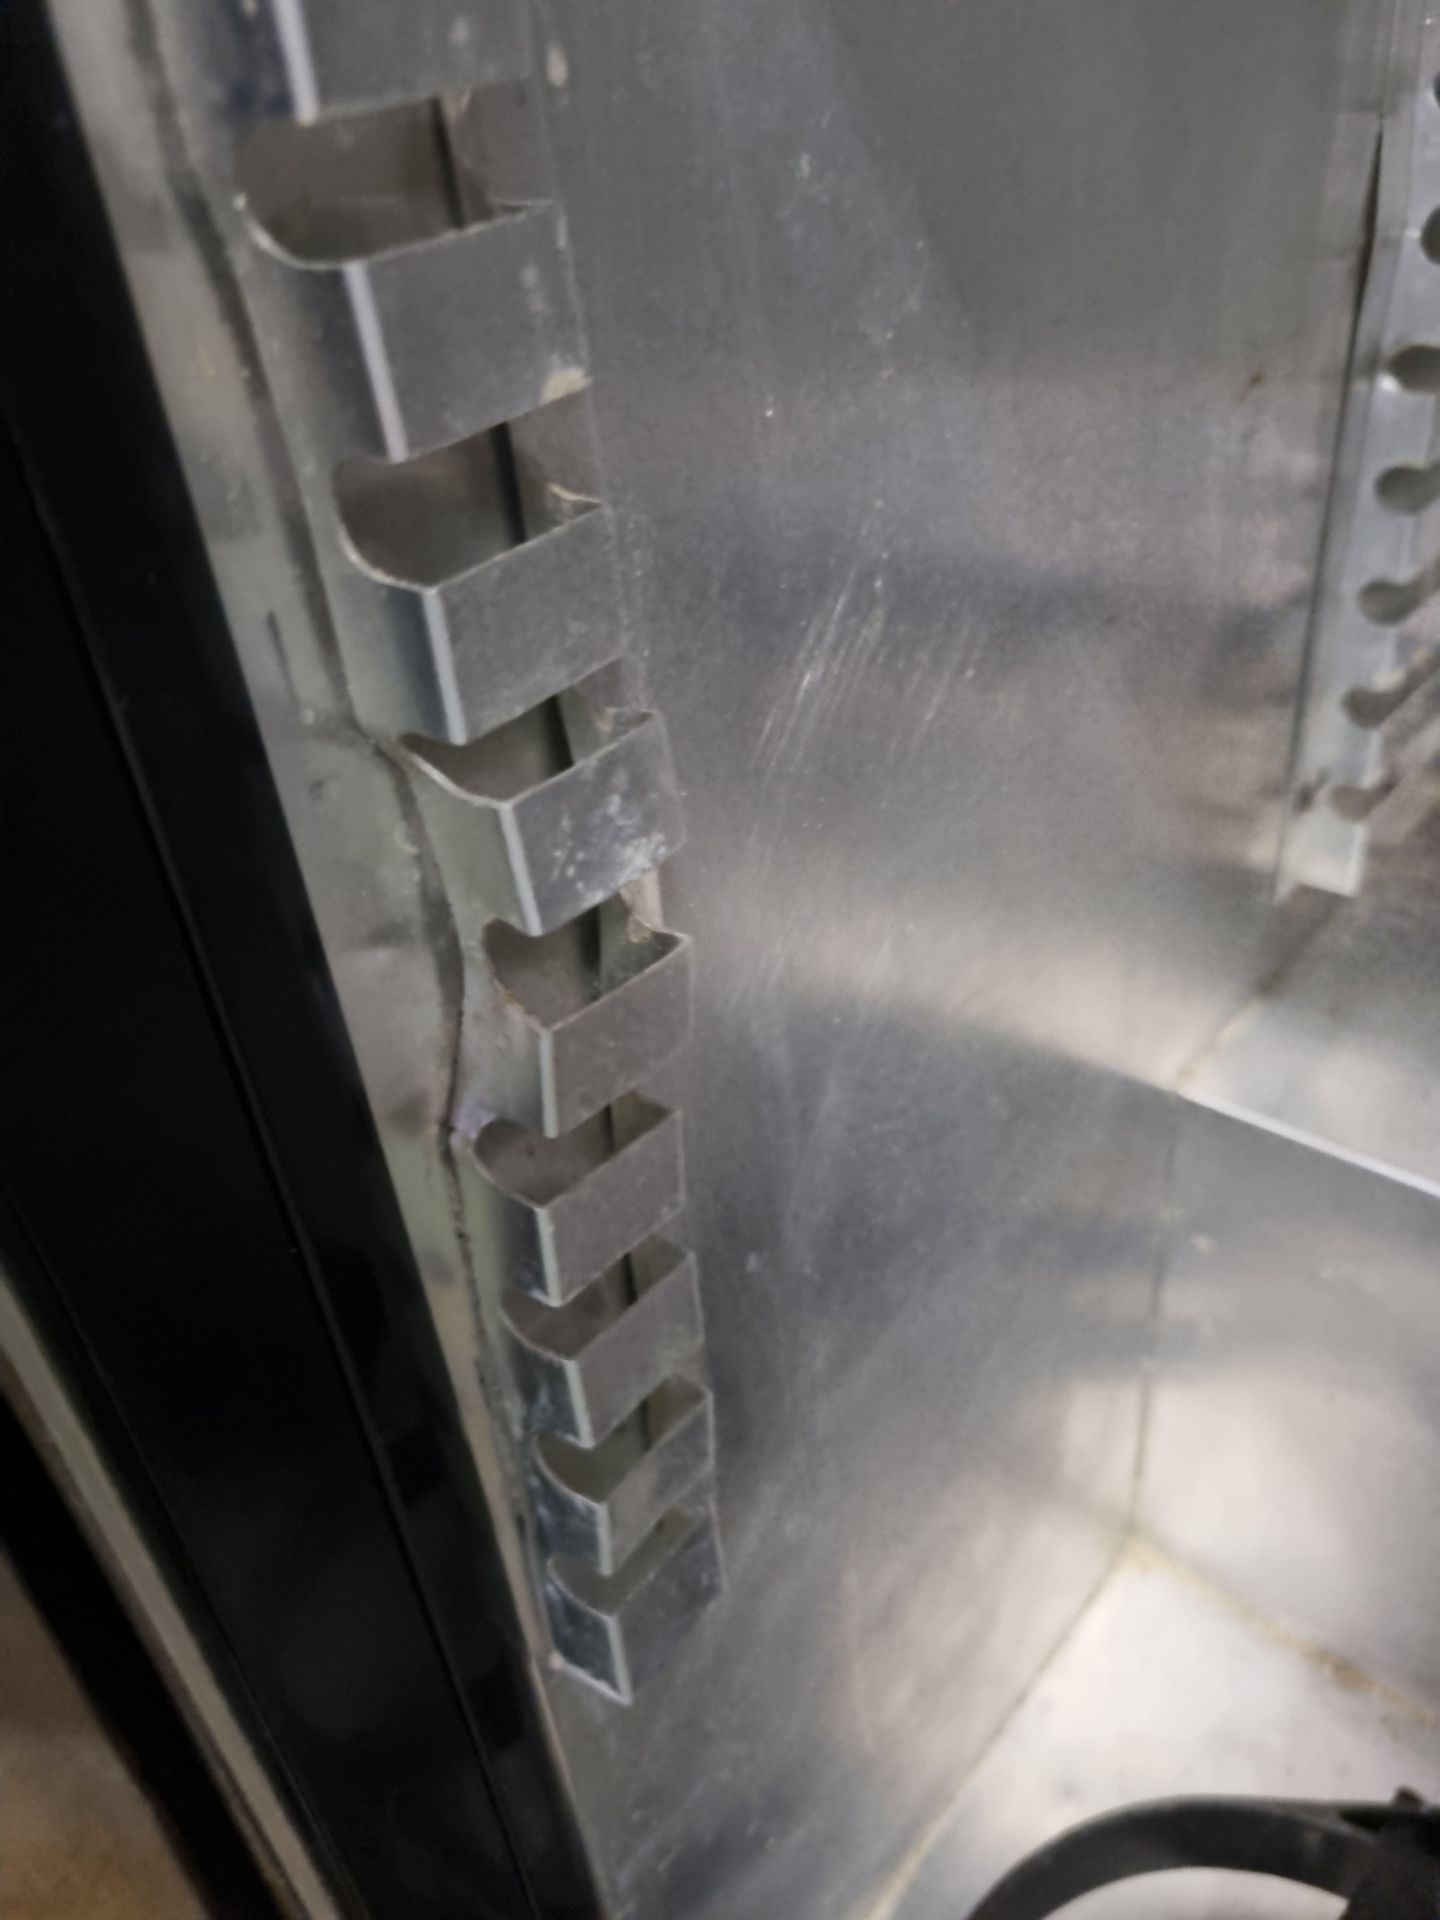 Foster HR140 stainless steel single door under counter fridge - W 605 x D 615 x H 830mm - Image 6 of 6